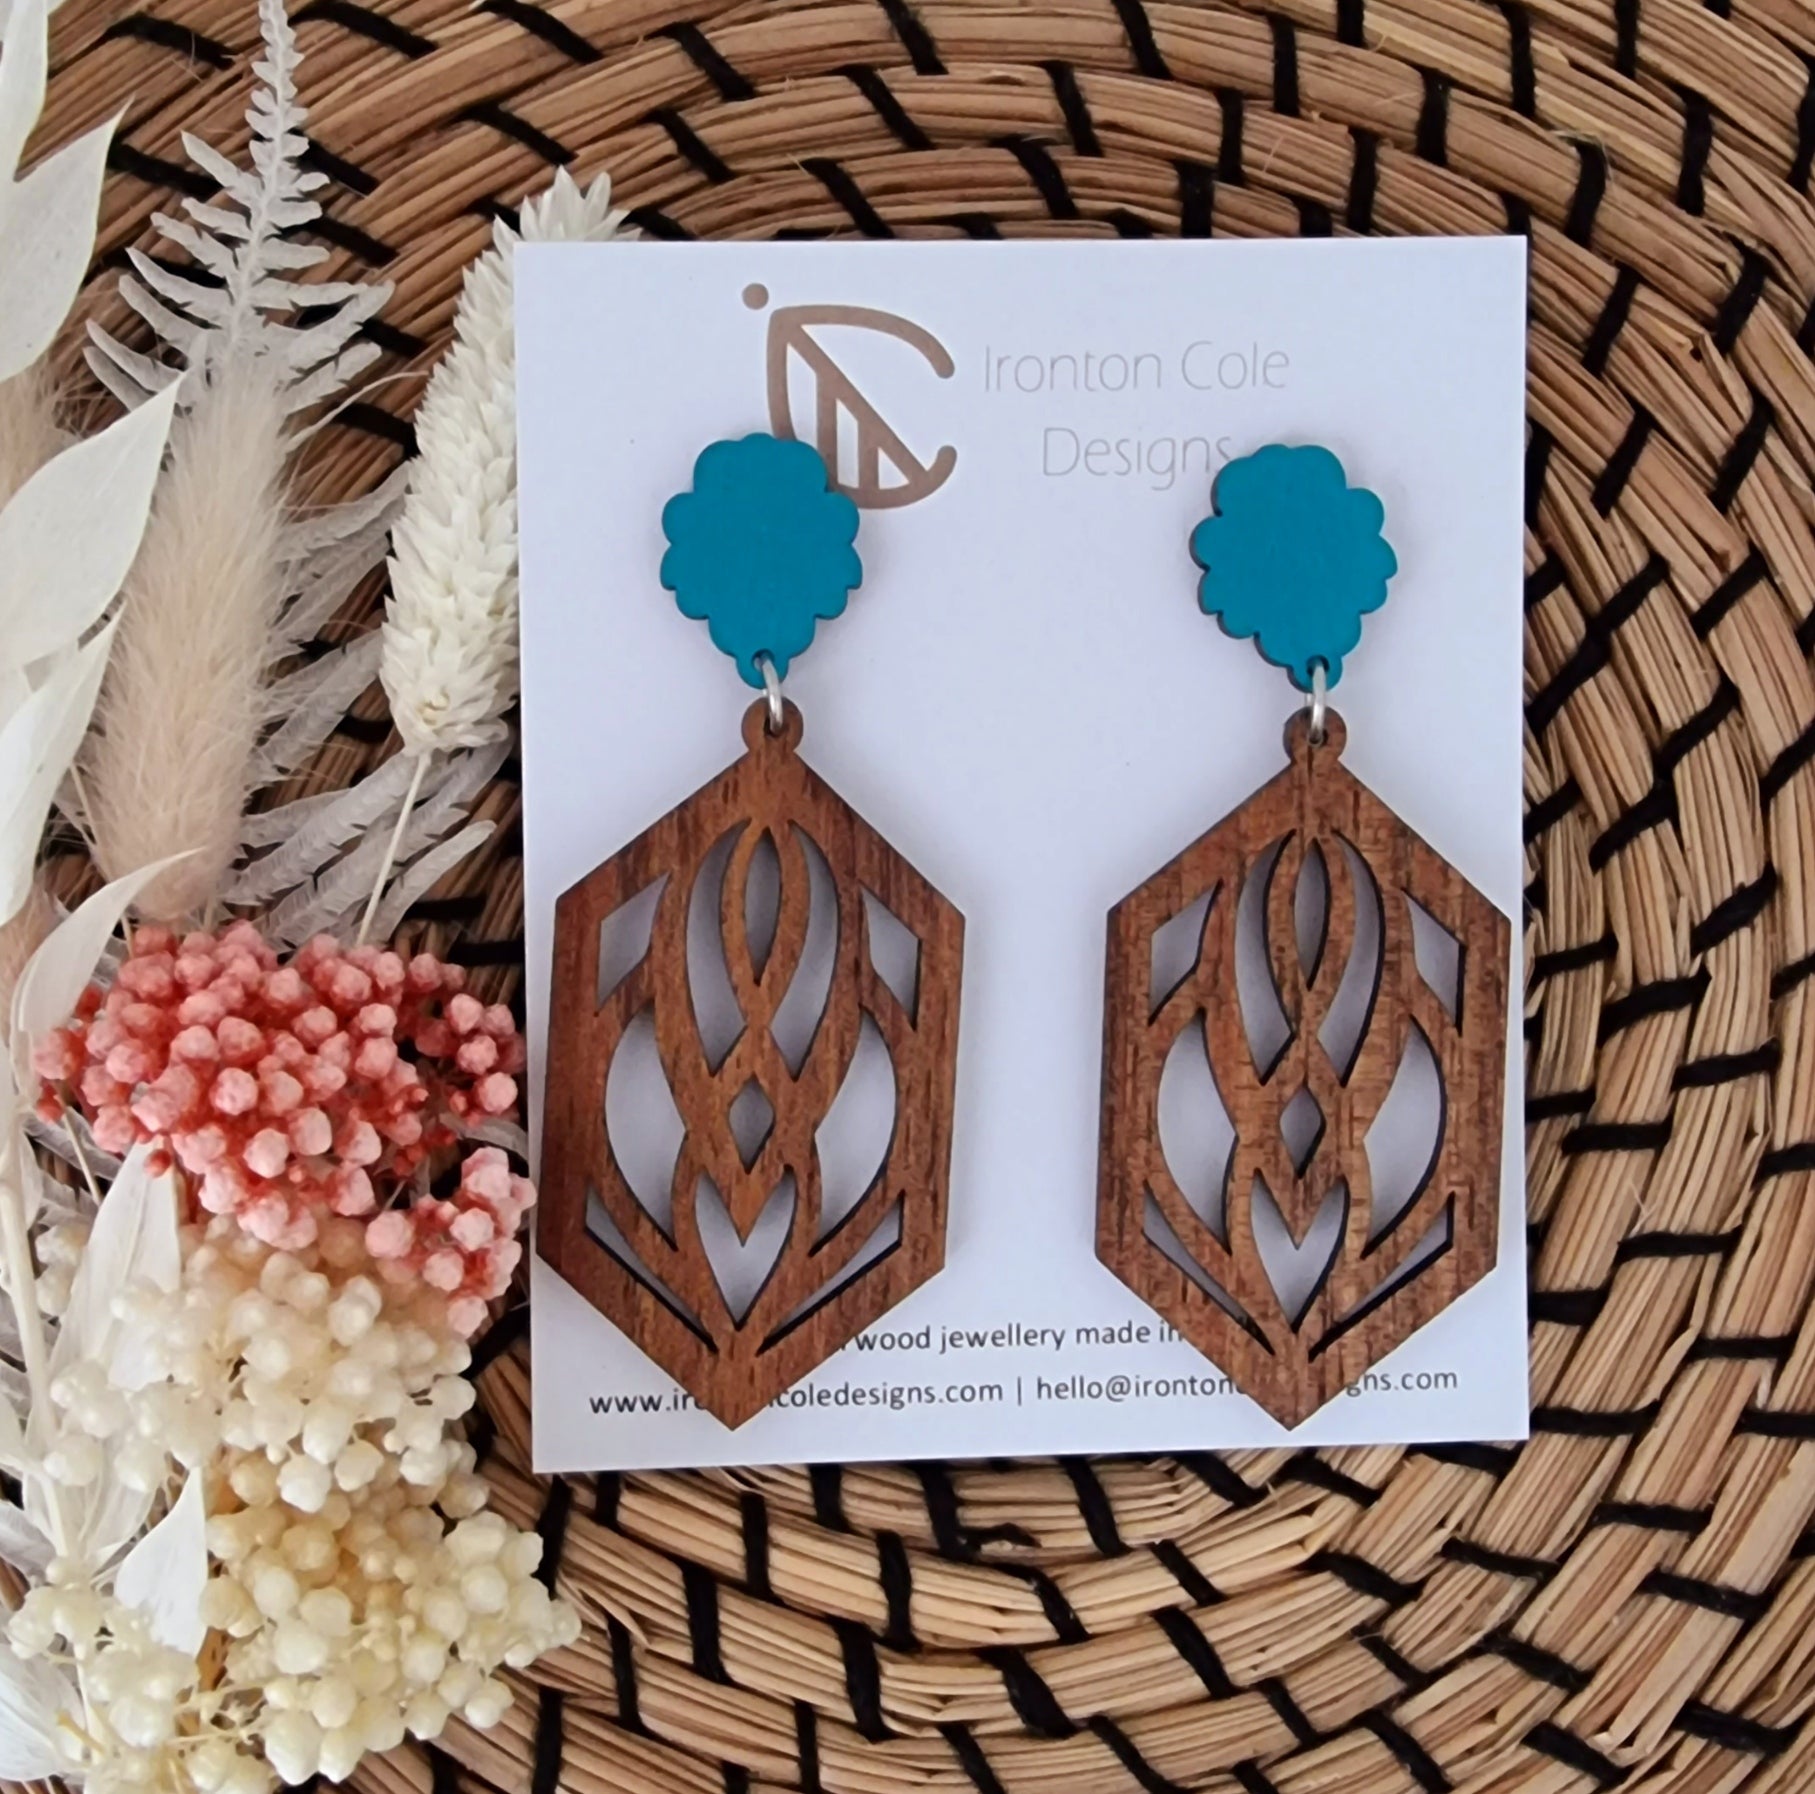 Spiral lined wooden earrings